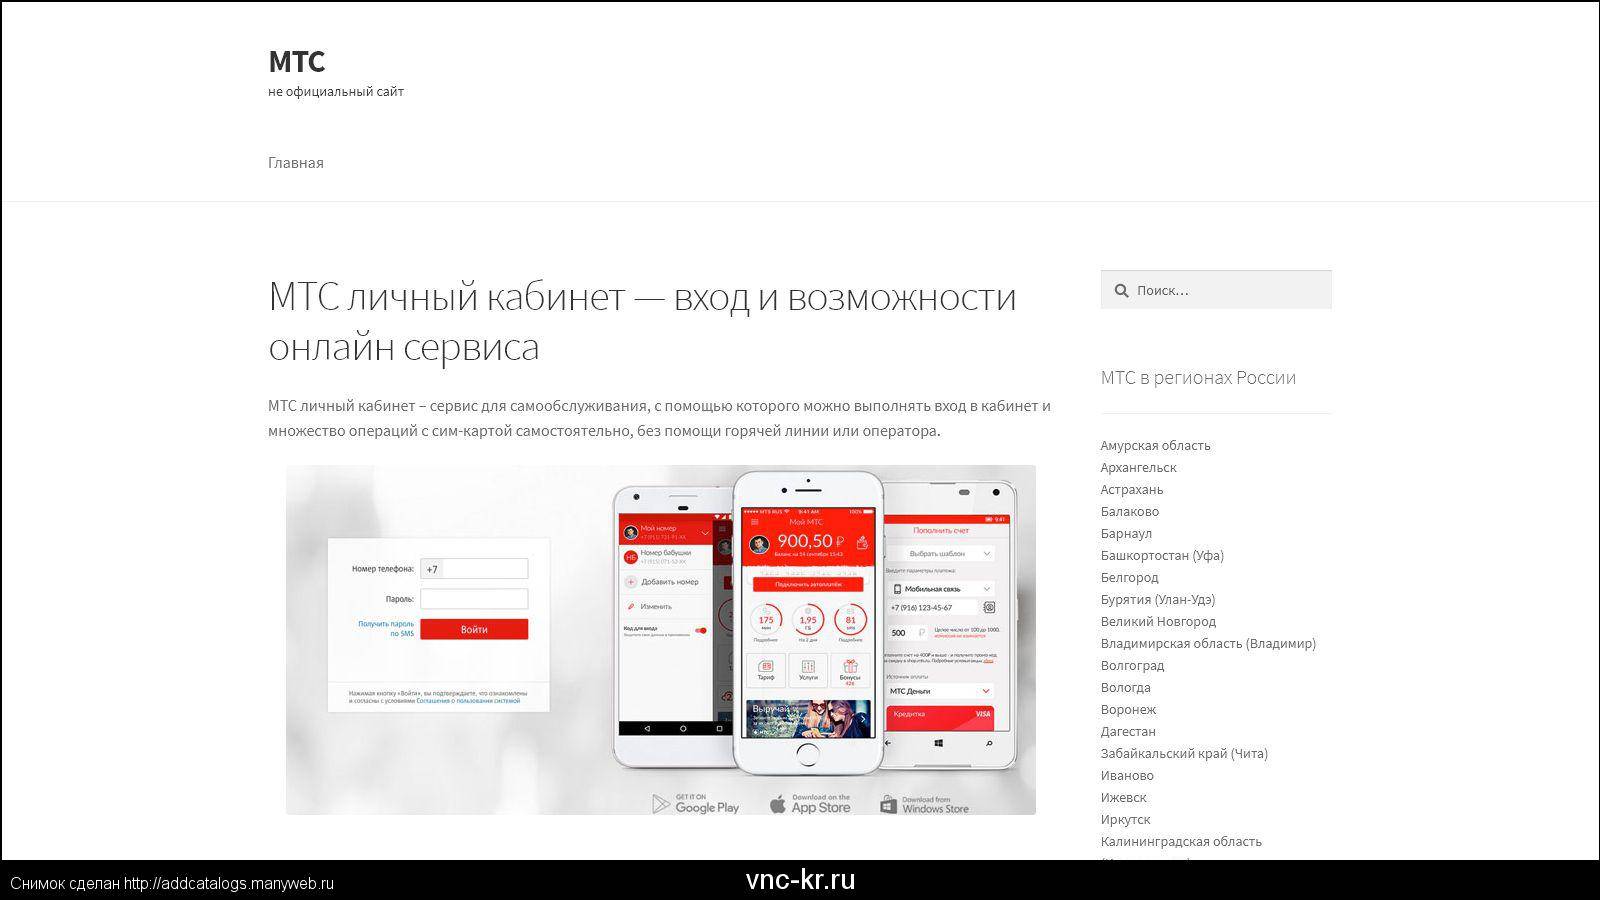 Услуга мтс онлайн: описание, как подключить, отключить тарифкин.ру
услуга мтс онлайн: описание, как подключить, отключить